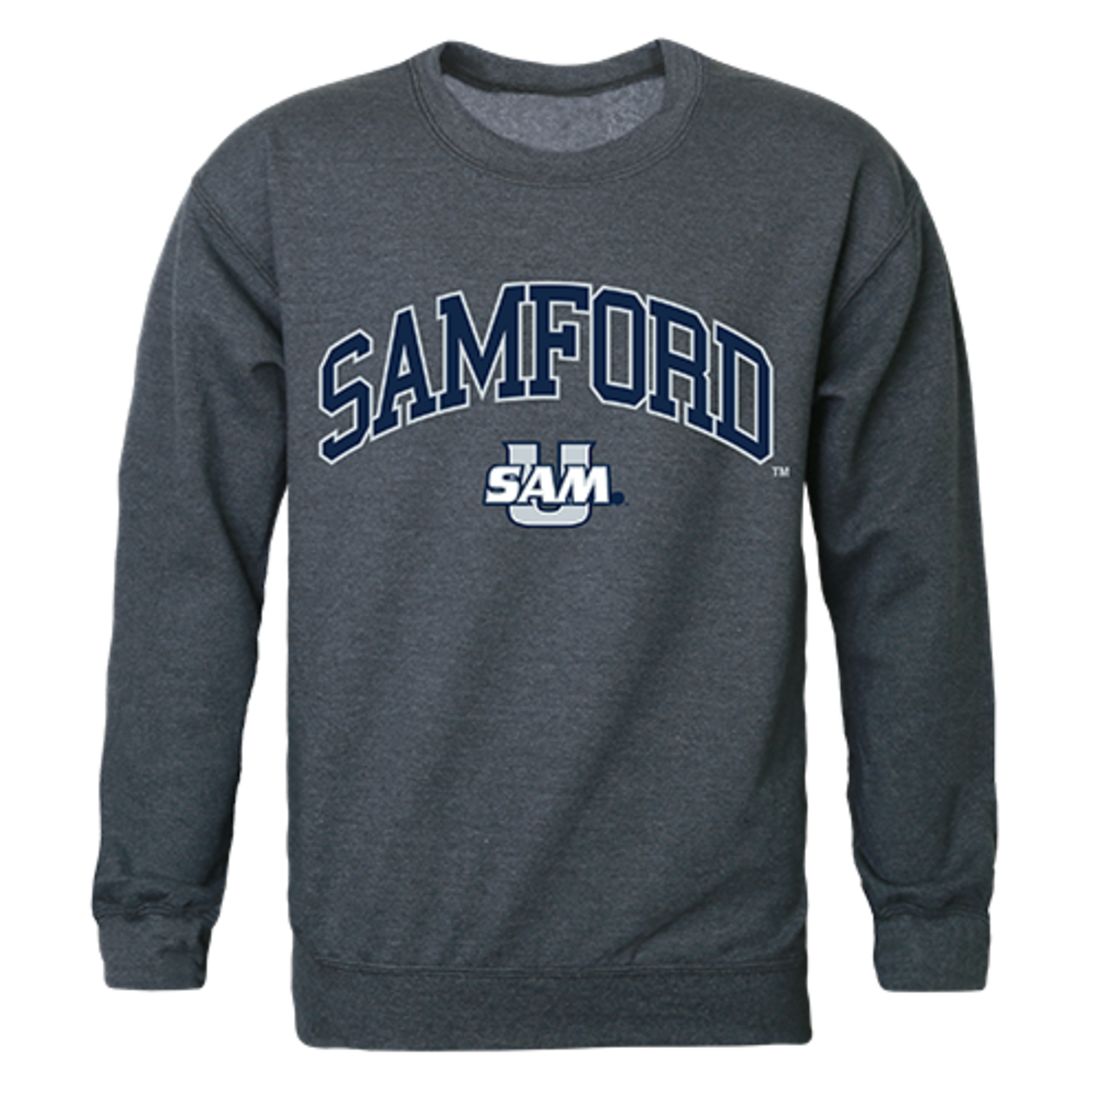 Samford University Campus Crewneck Pullover Sweatshirt Sweater Heather Charcoal-Campus-Wardrobe